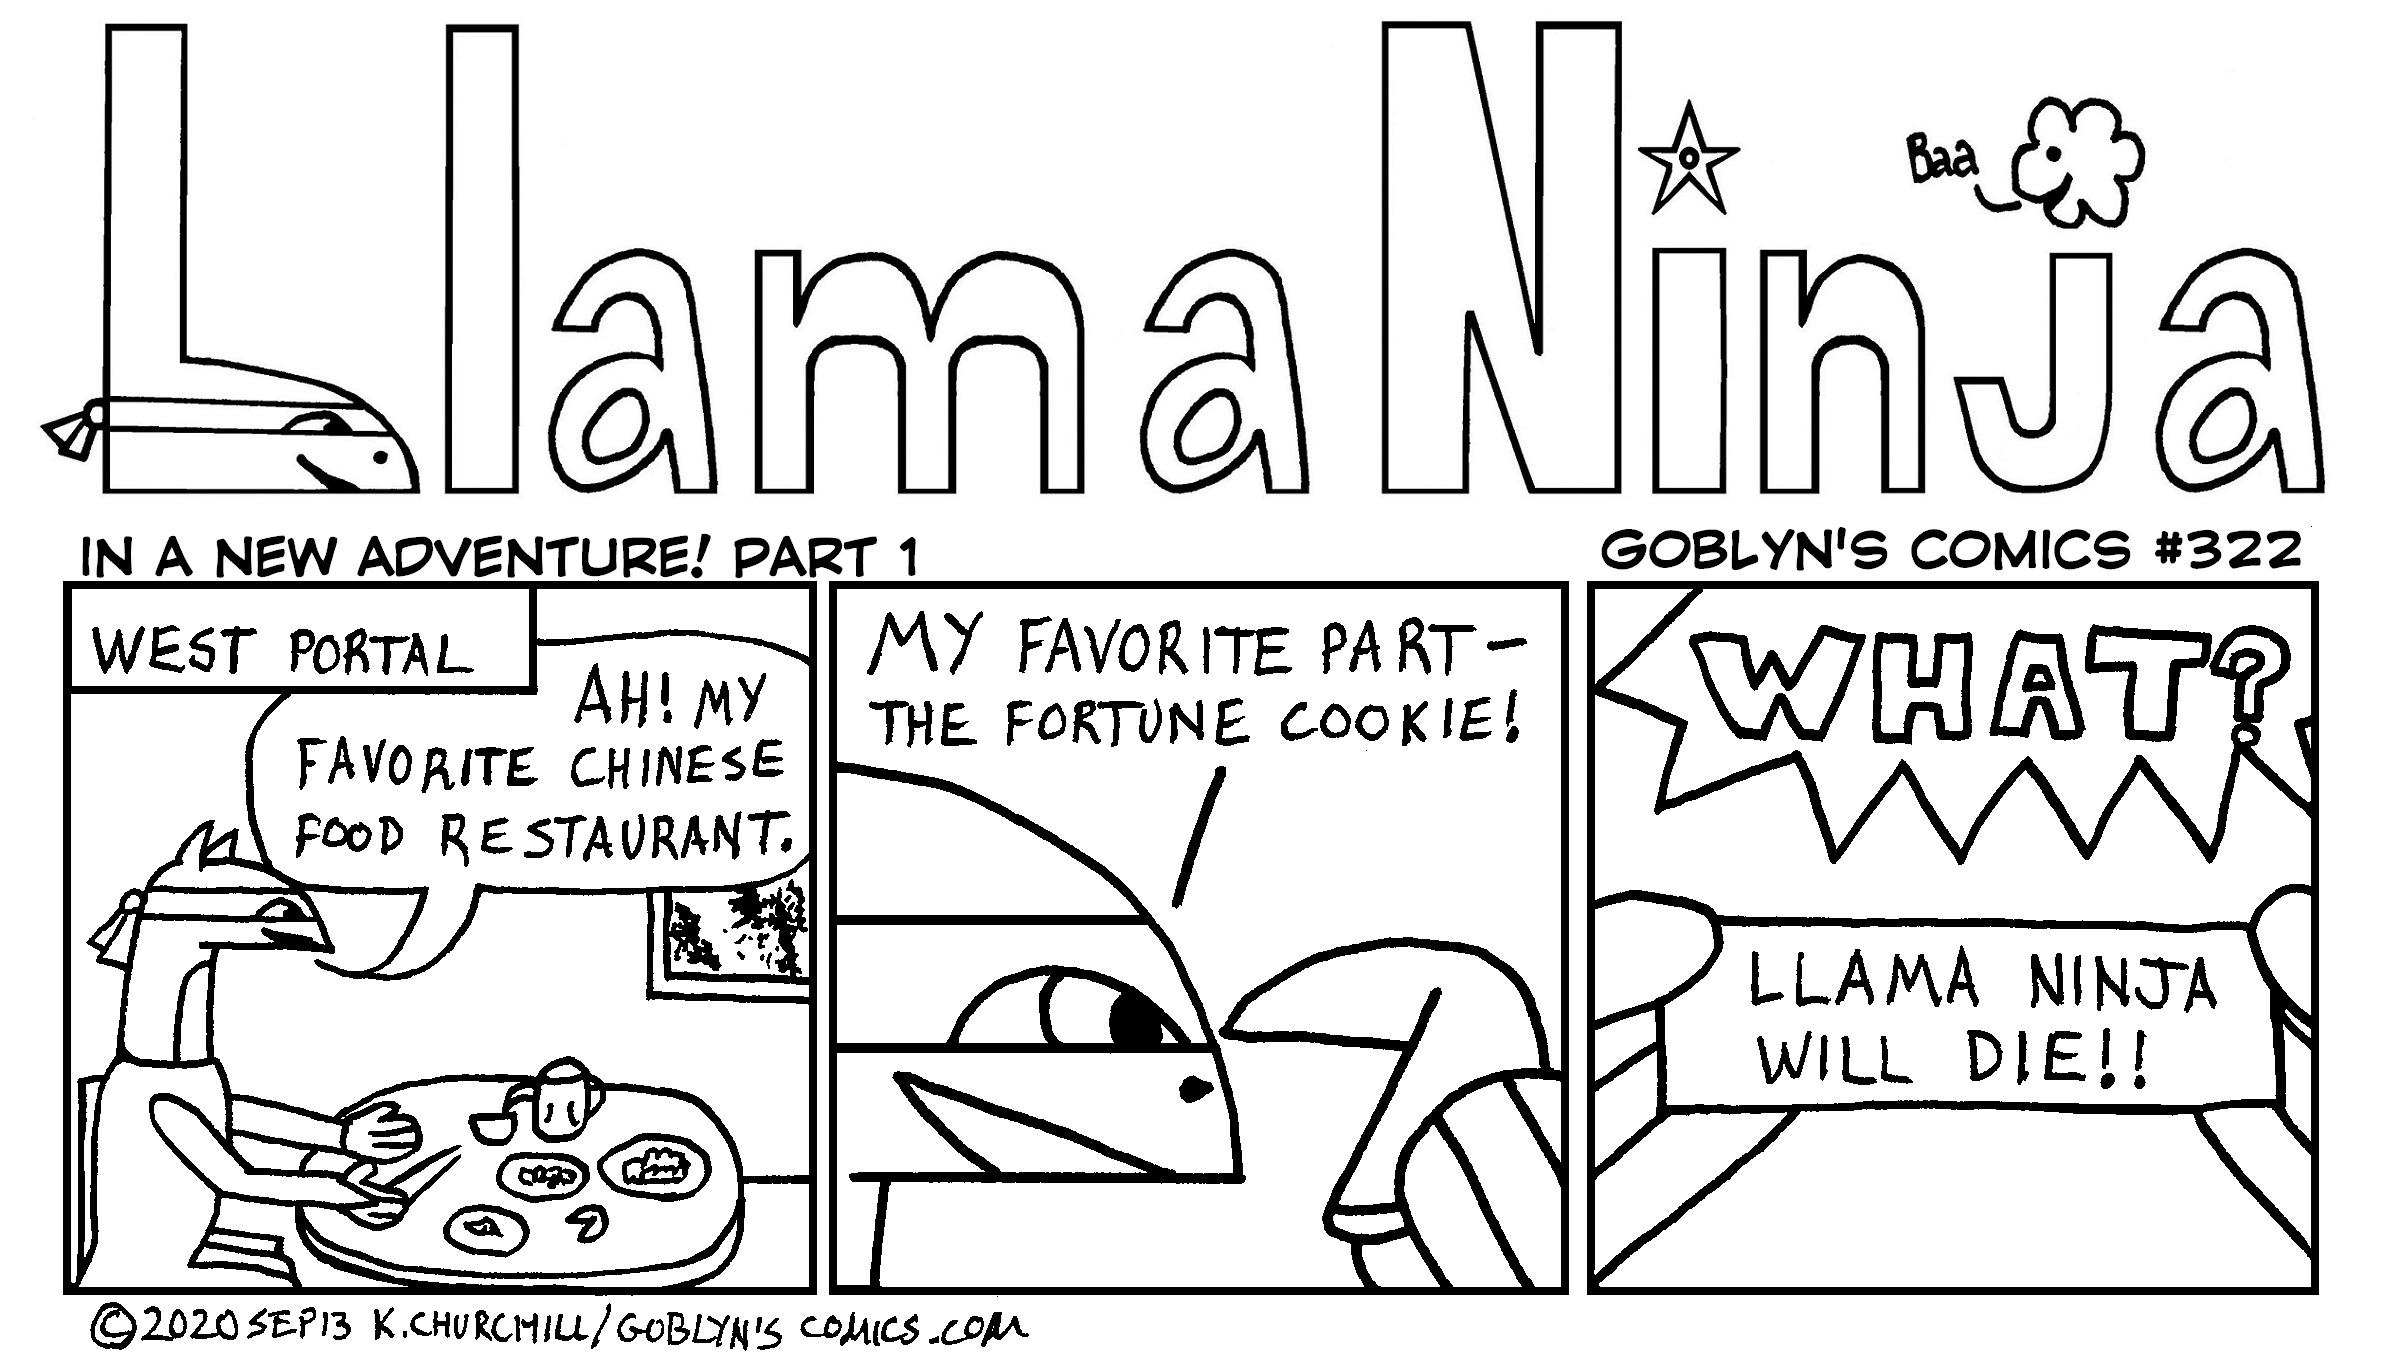 Llama Ninja